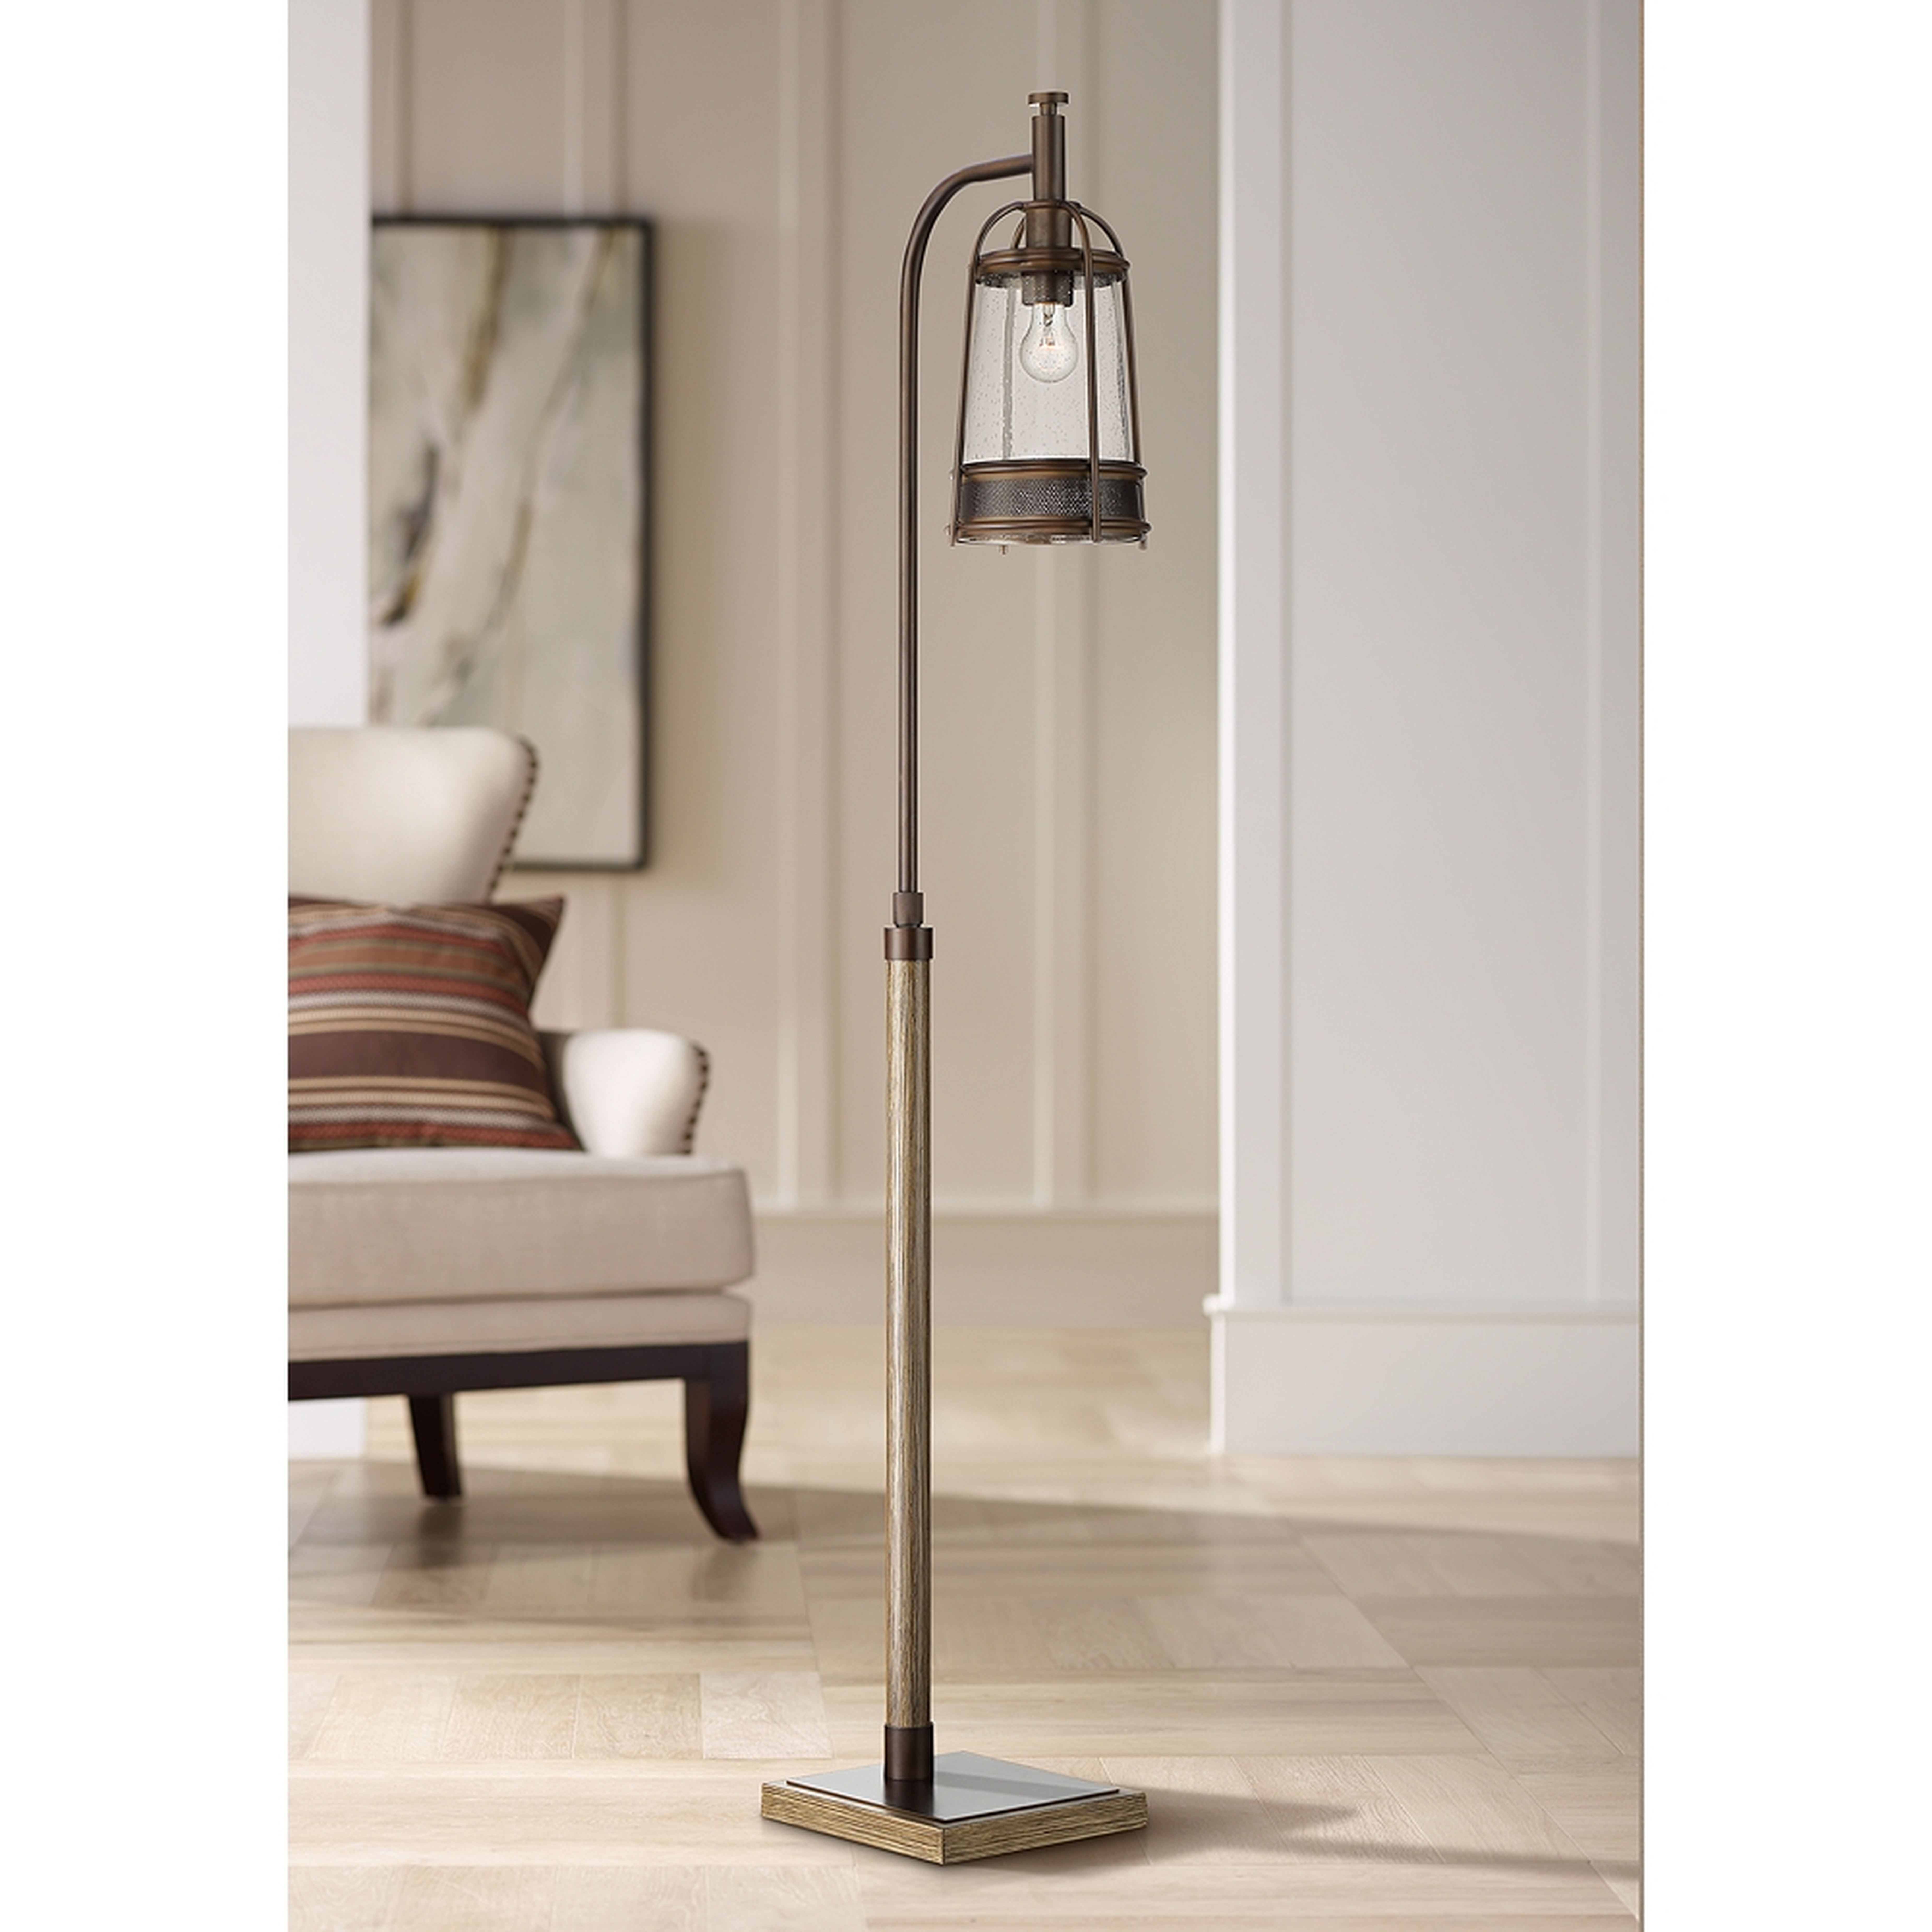 Hugh Bronze and Wood Downbridge Floor Lamp - Style # 79X91 - Lamps Plus